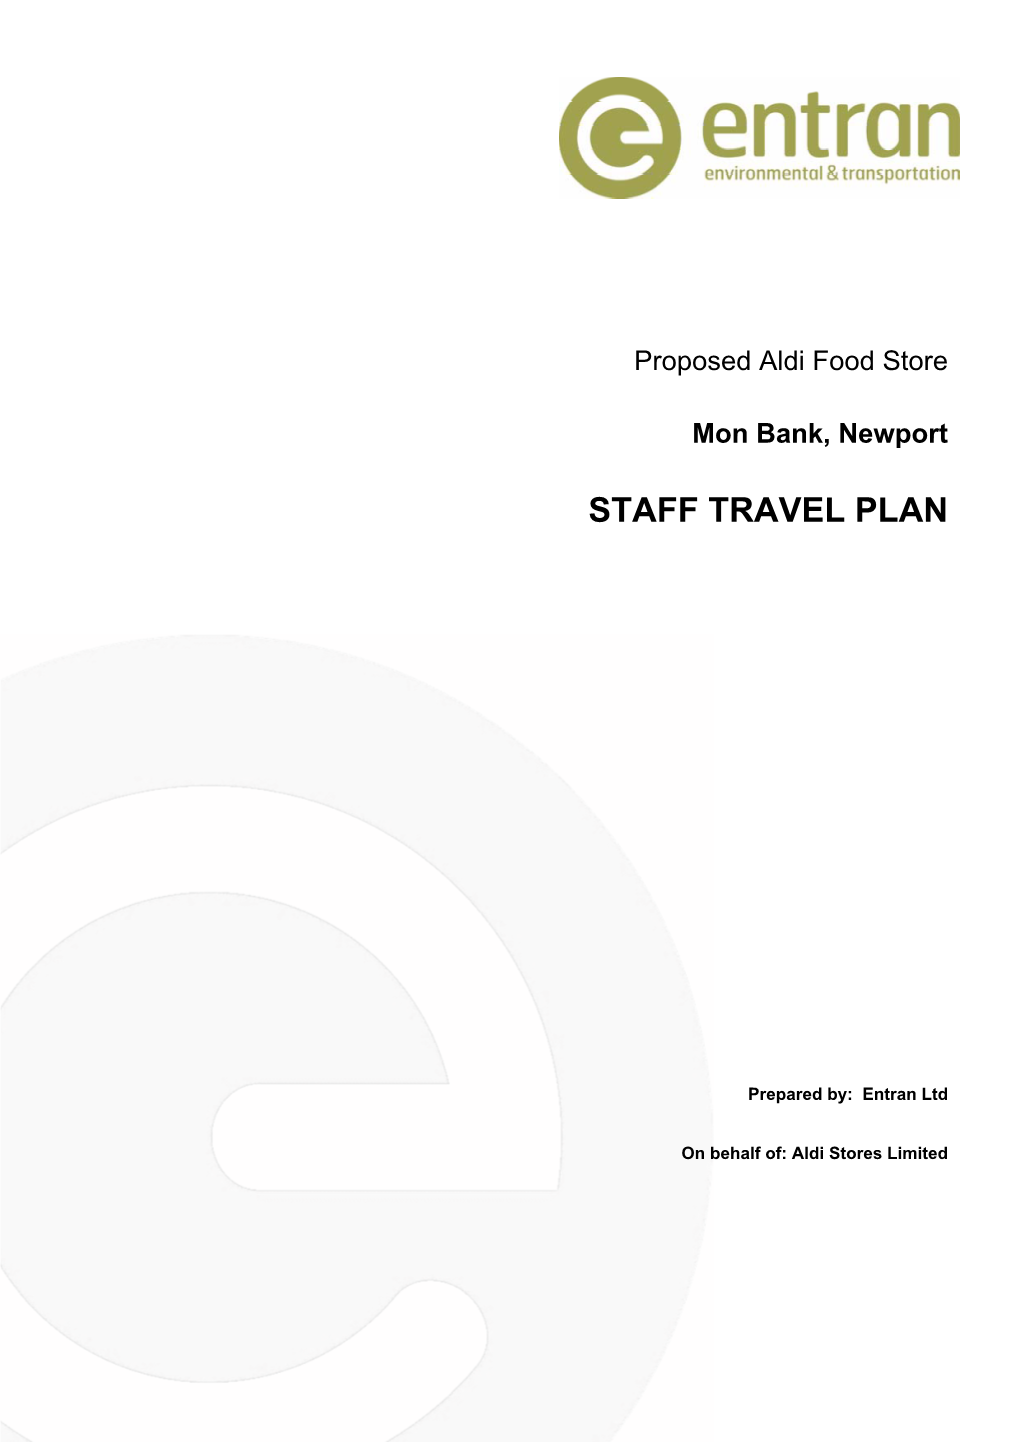 Staff Travel Plan